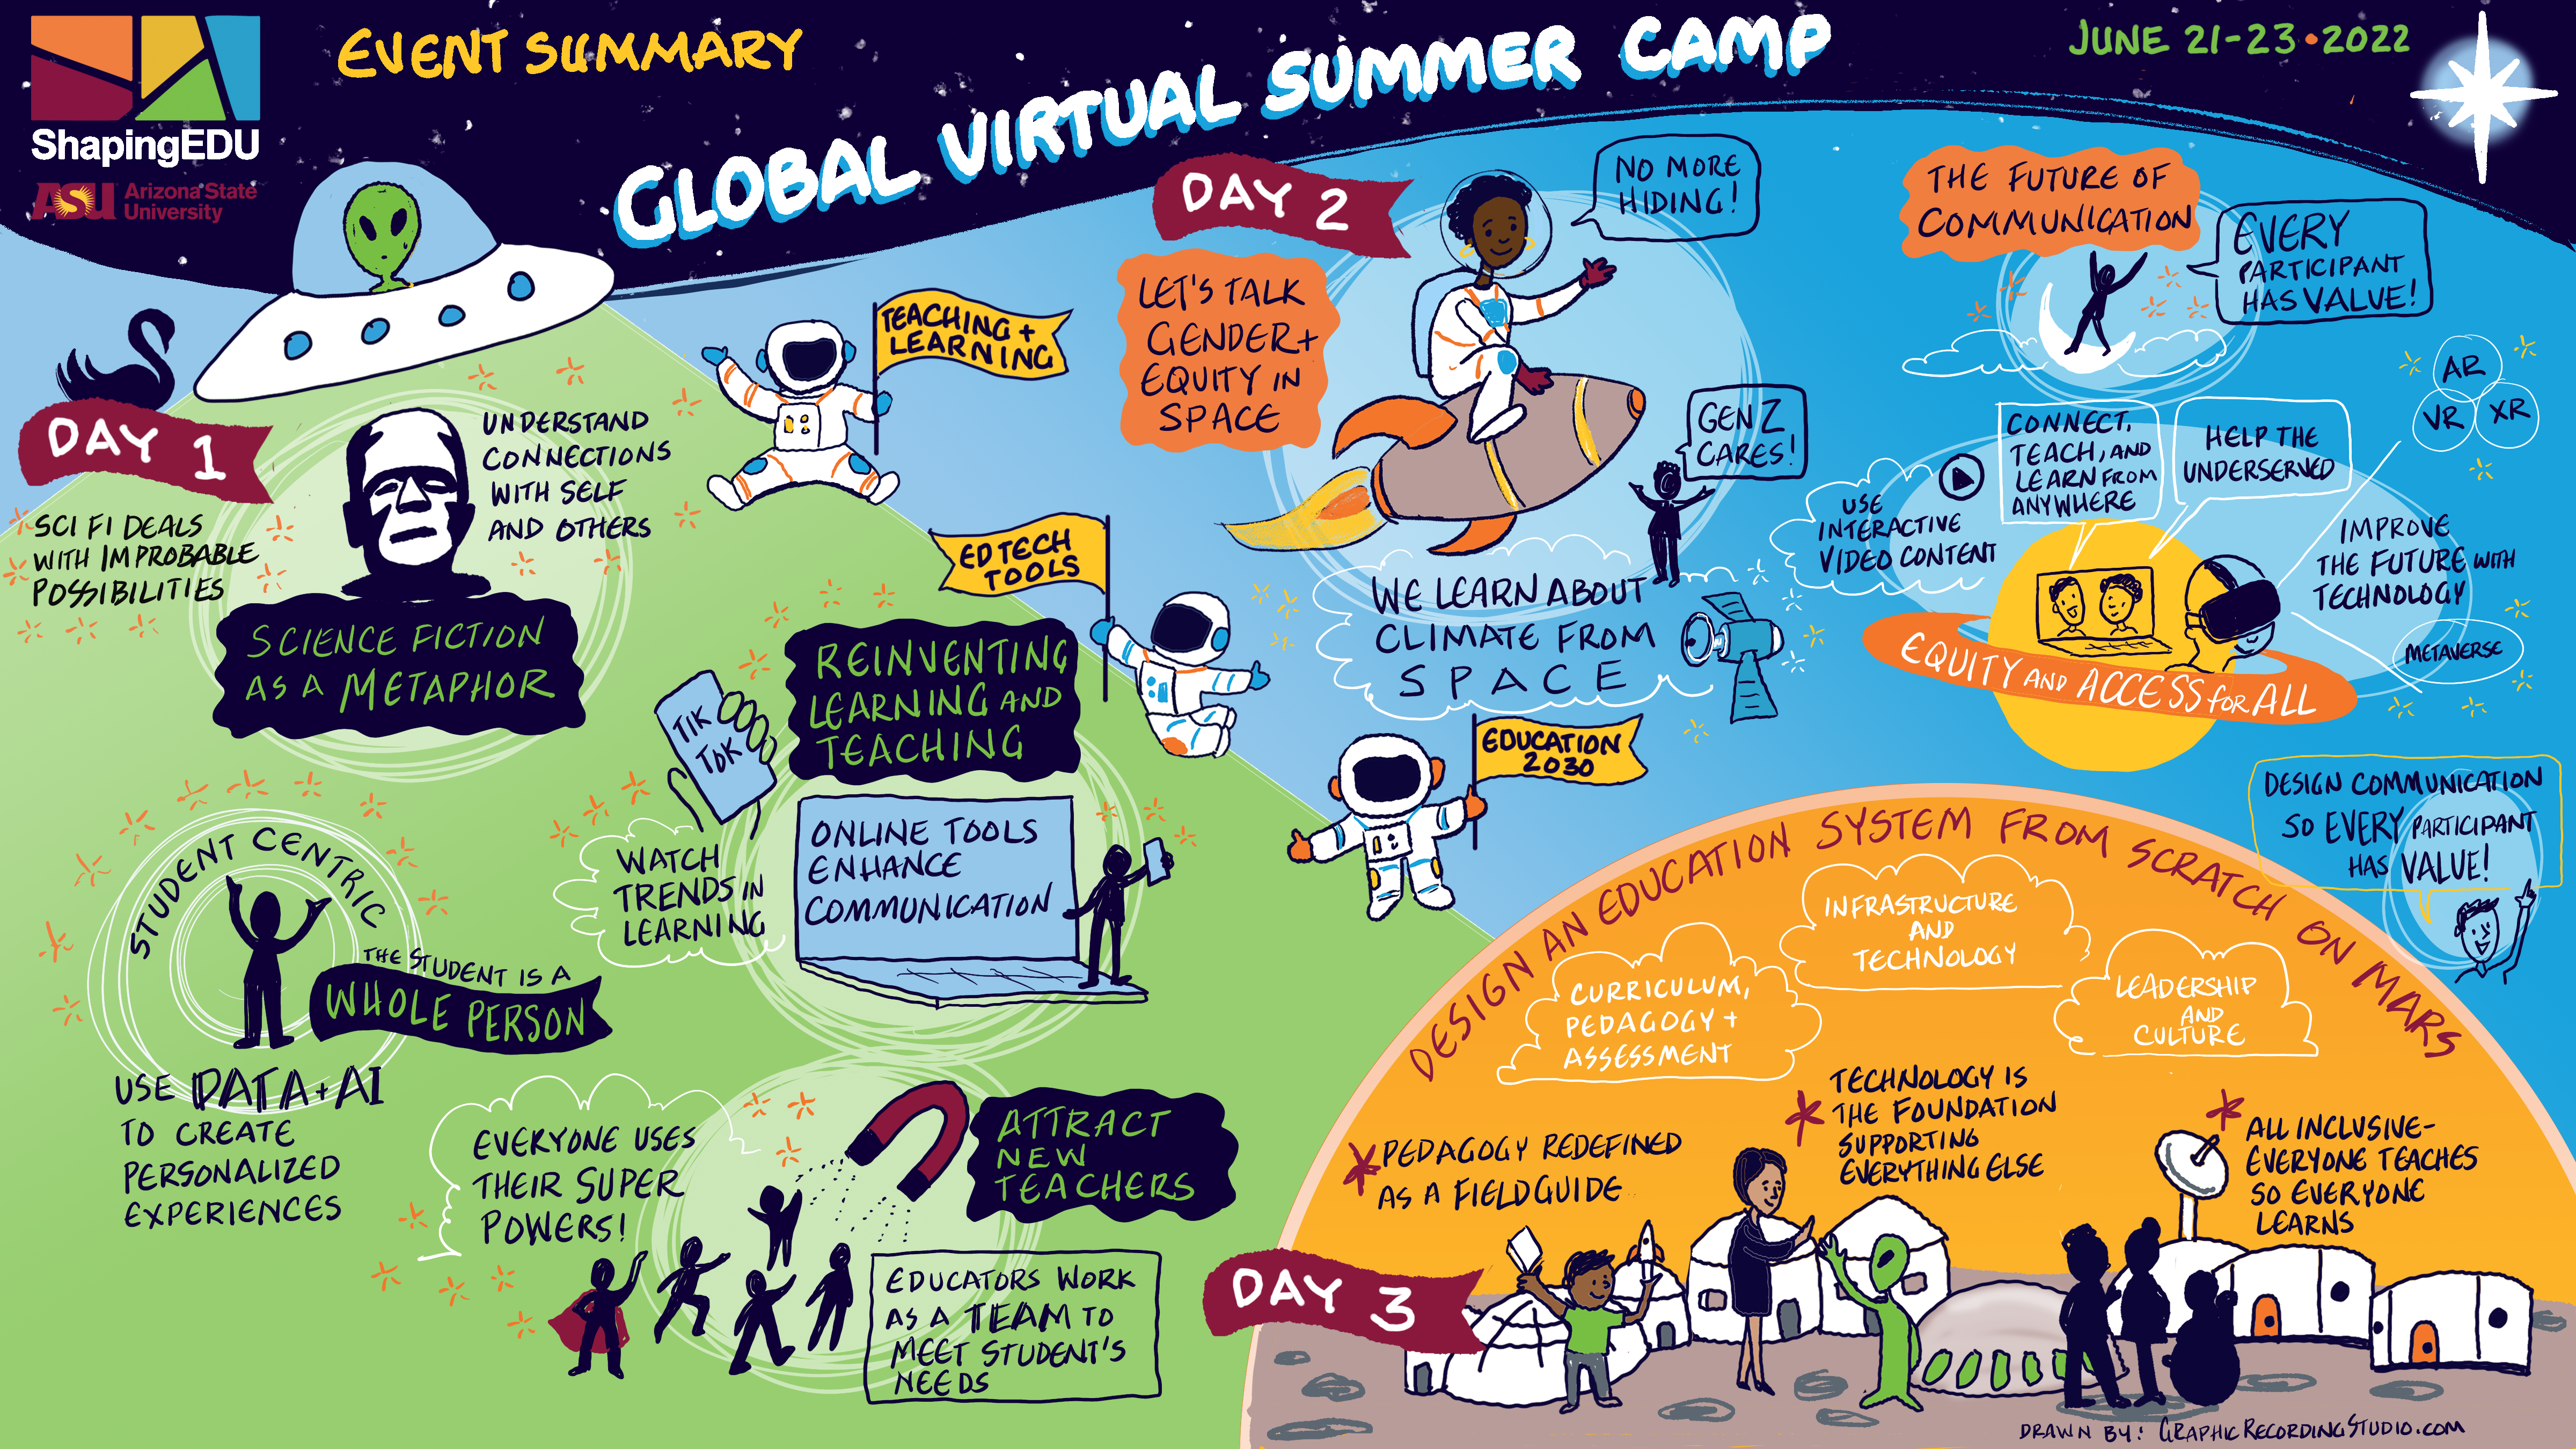 ShapingEDU Global Virtual Summer Camp | Event Summary